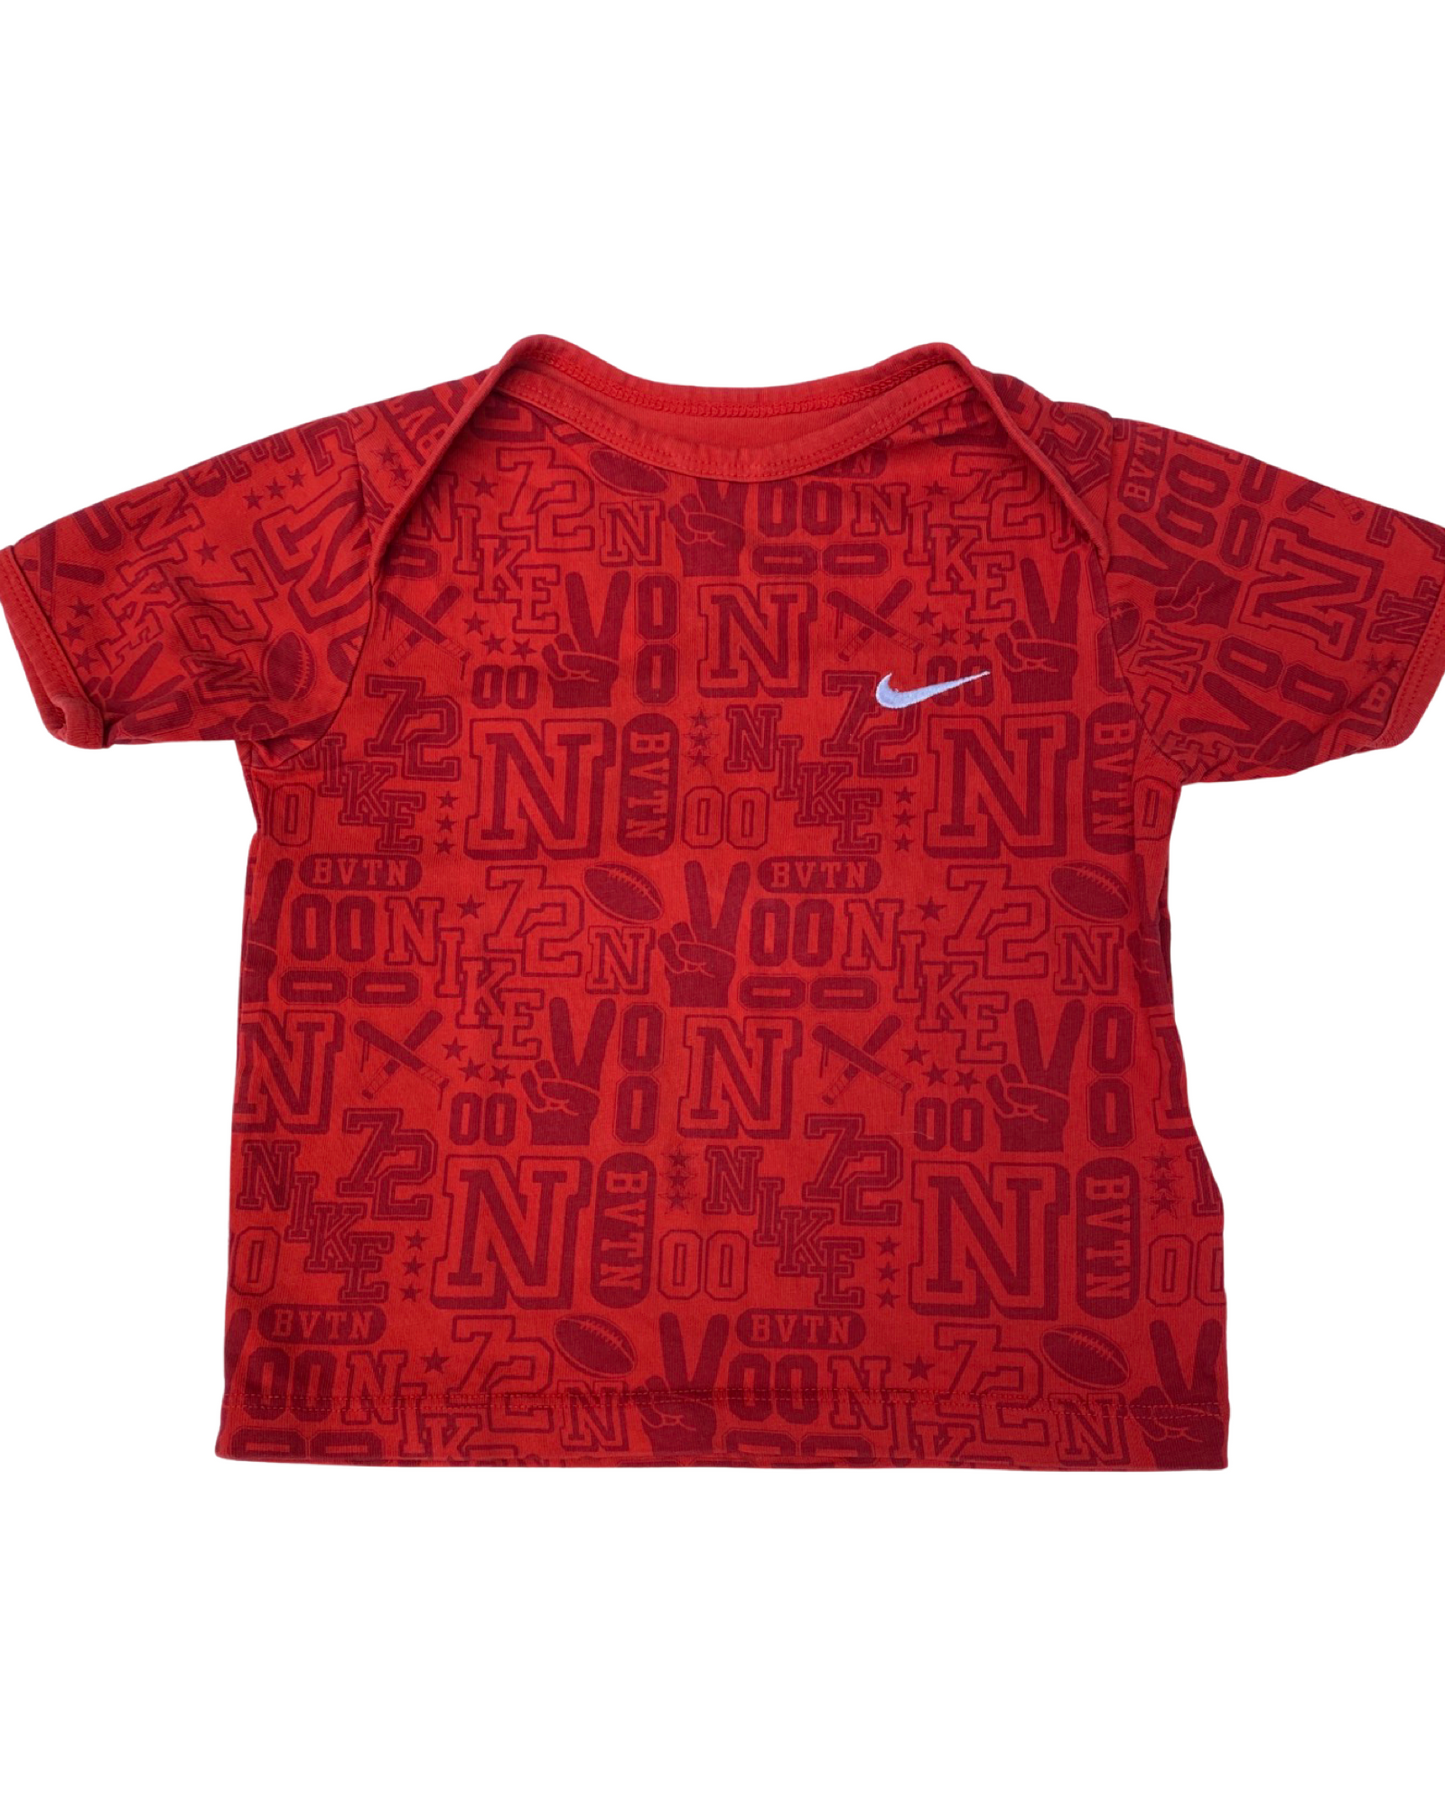 Nike vintage printed t shirt (size 18-24mths)